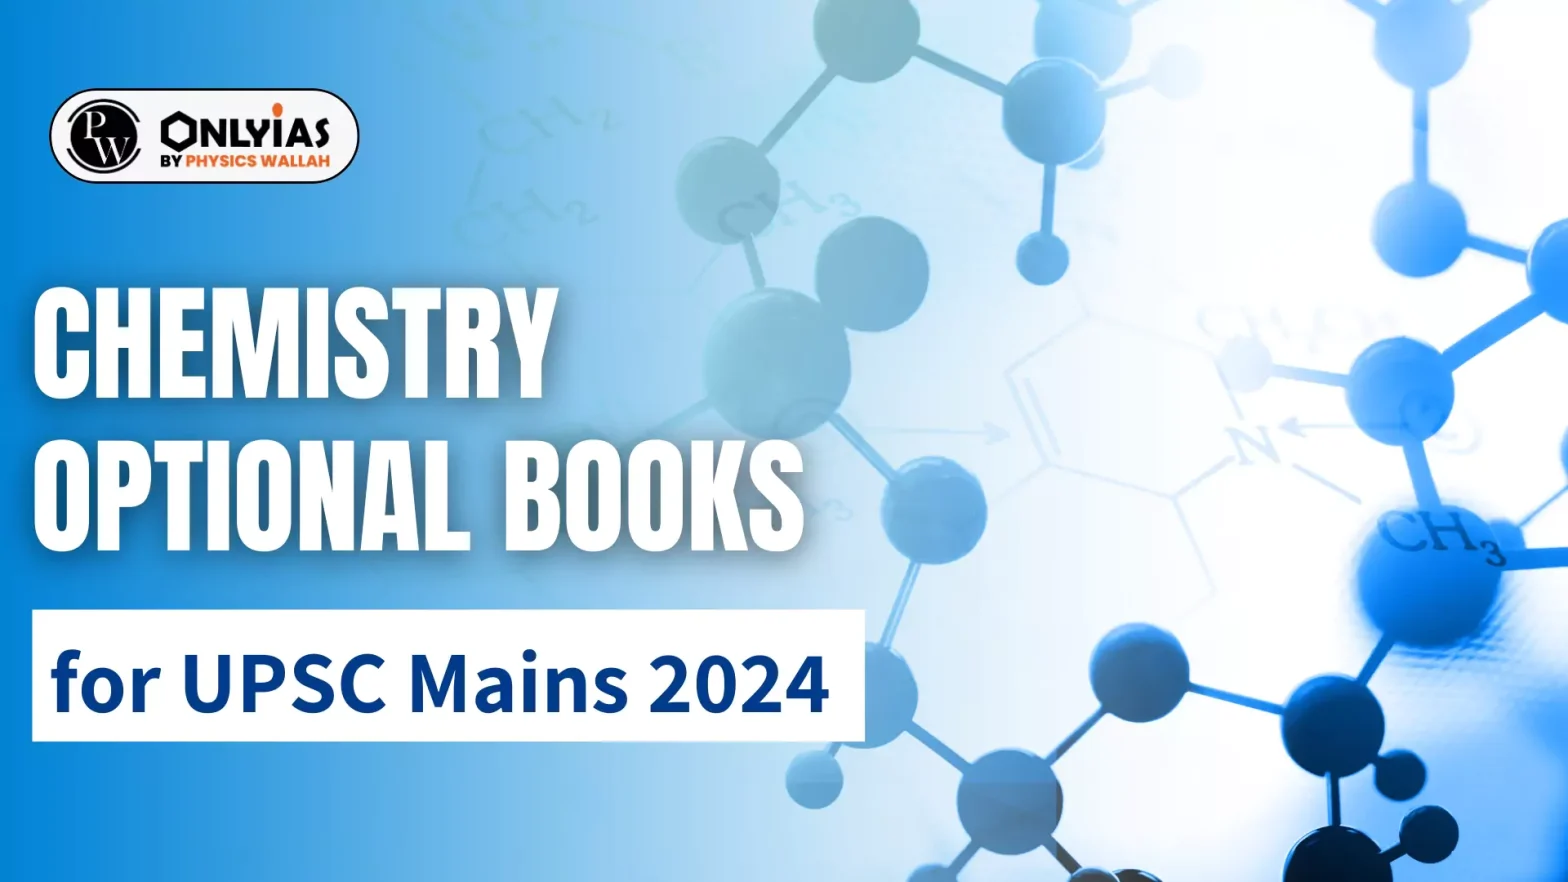 Chemistry Optional books for UPSC Mains 2024